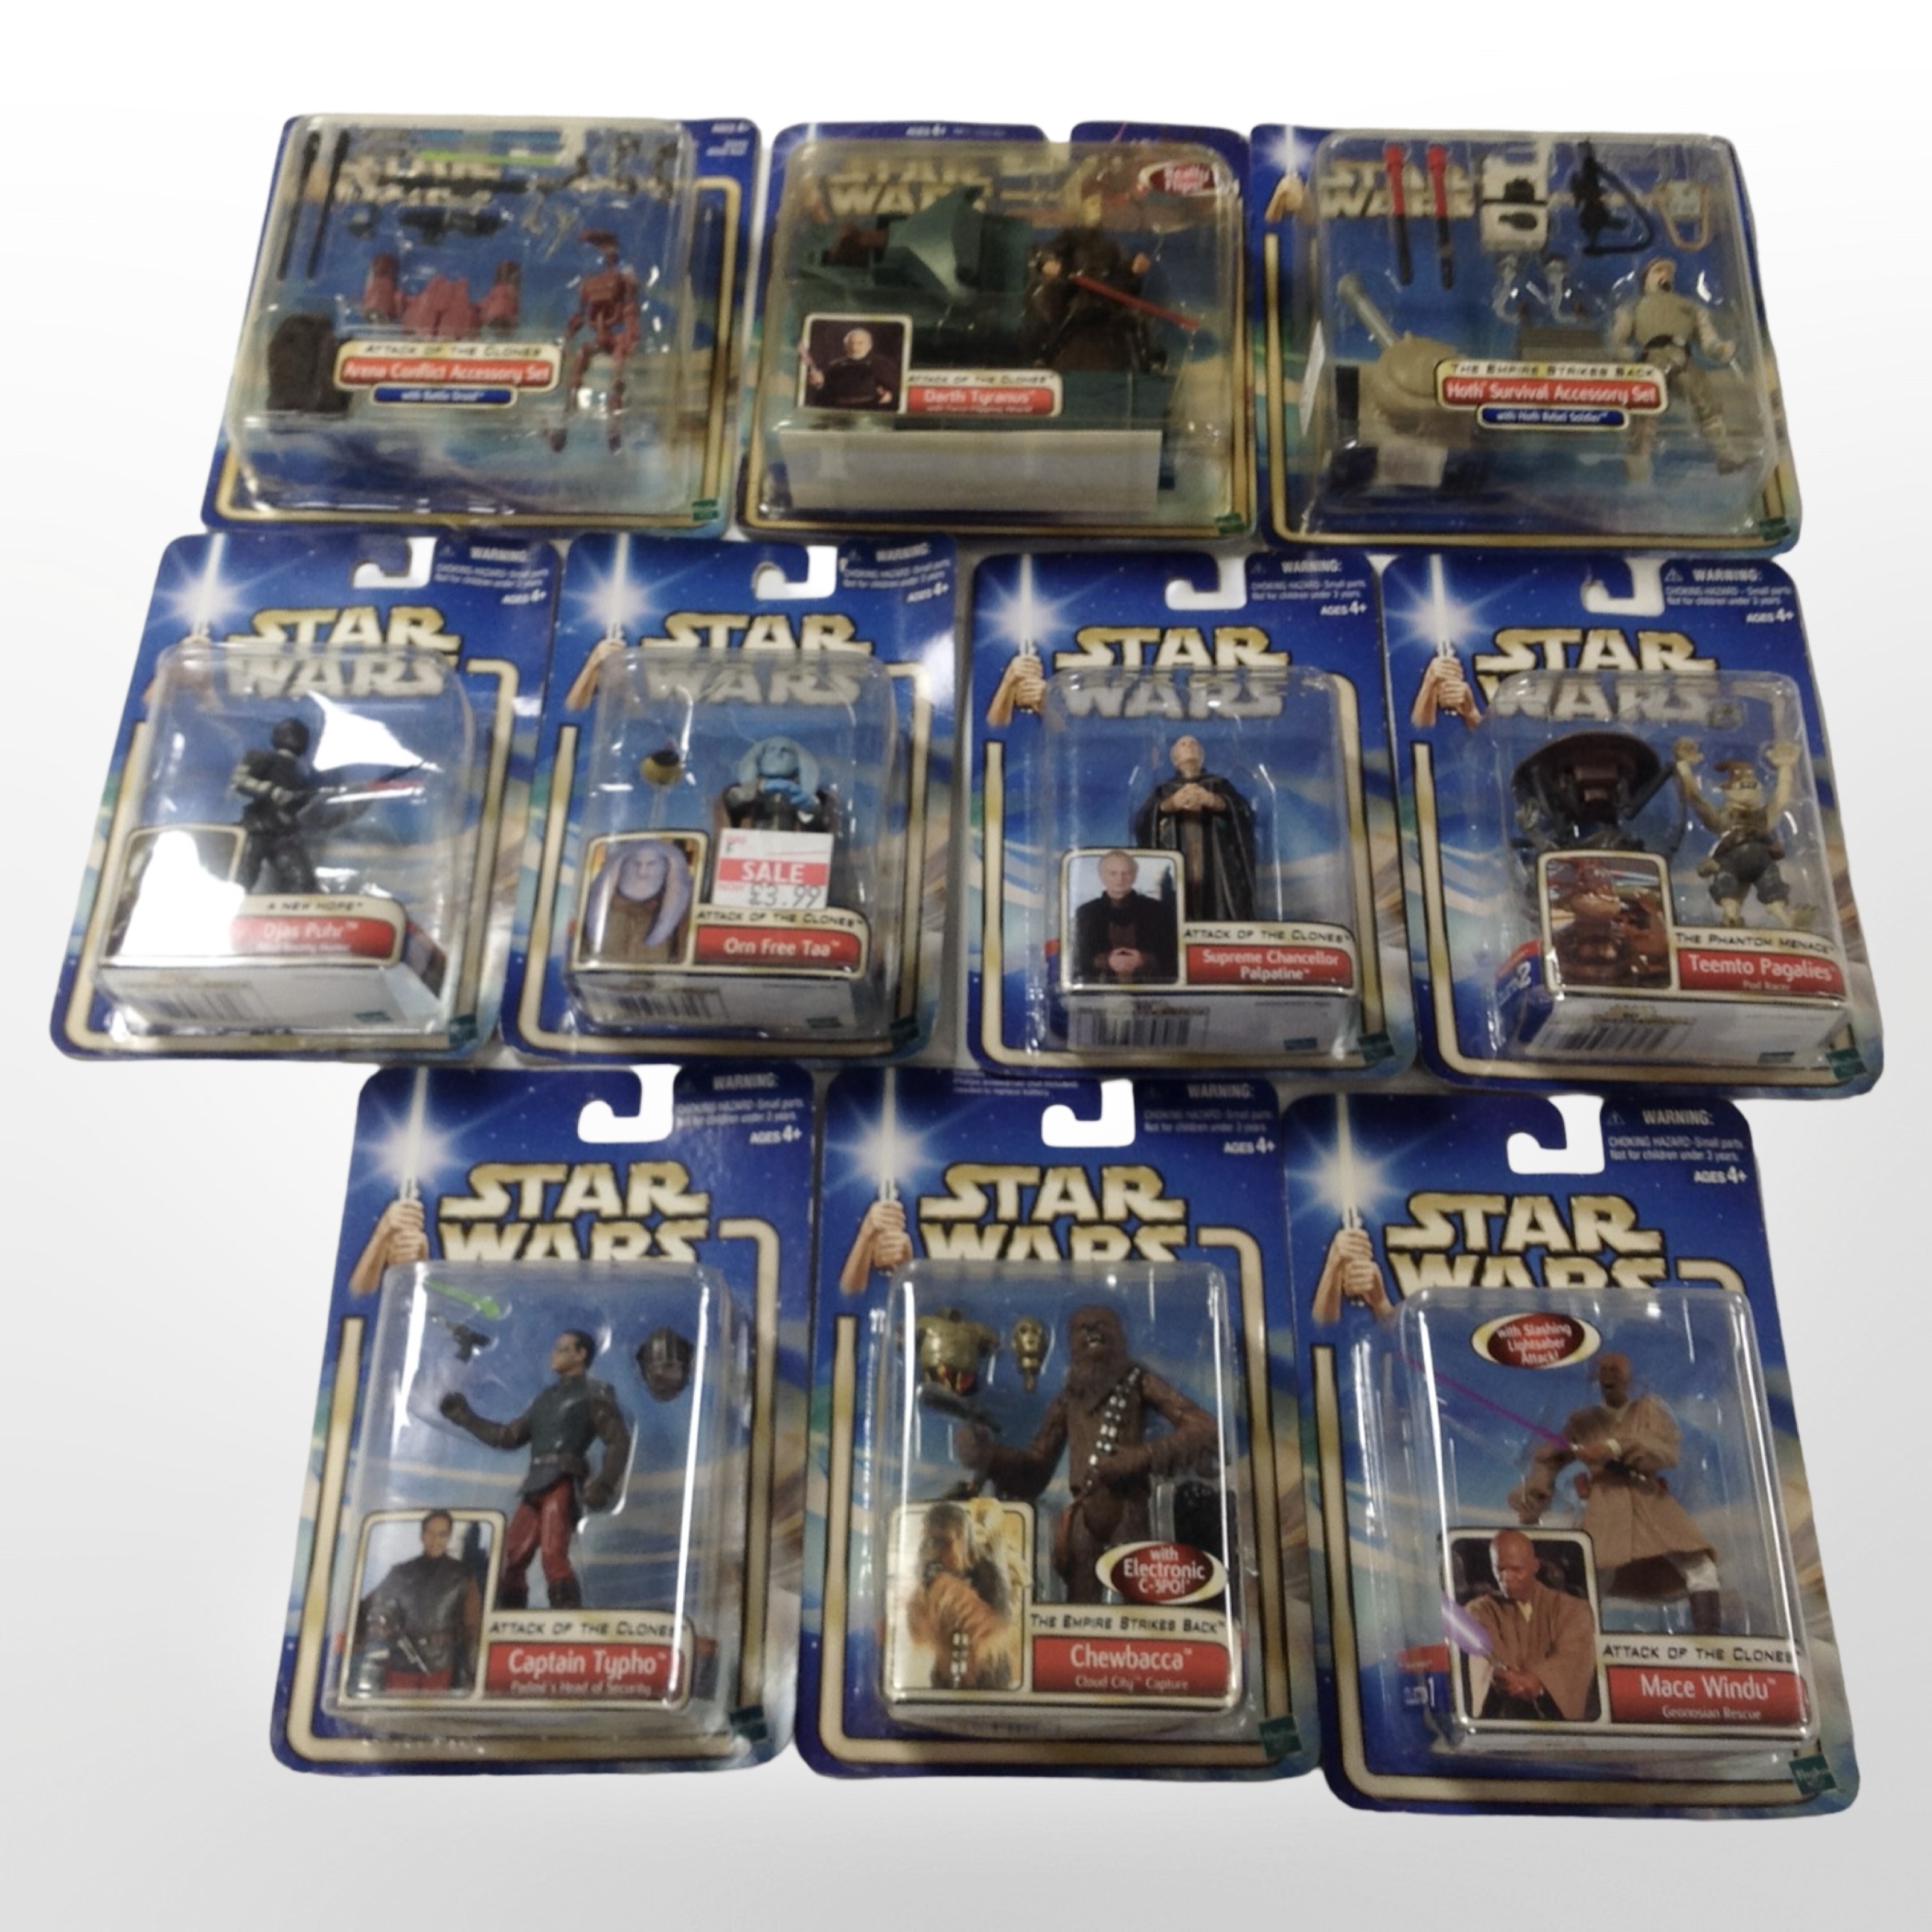 10 Hasbro Star Wars figurines, boxed.